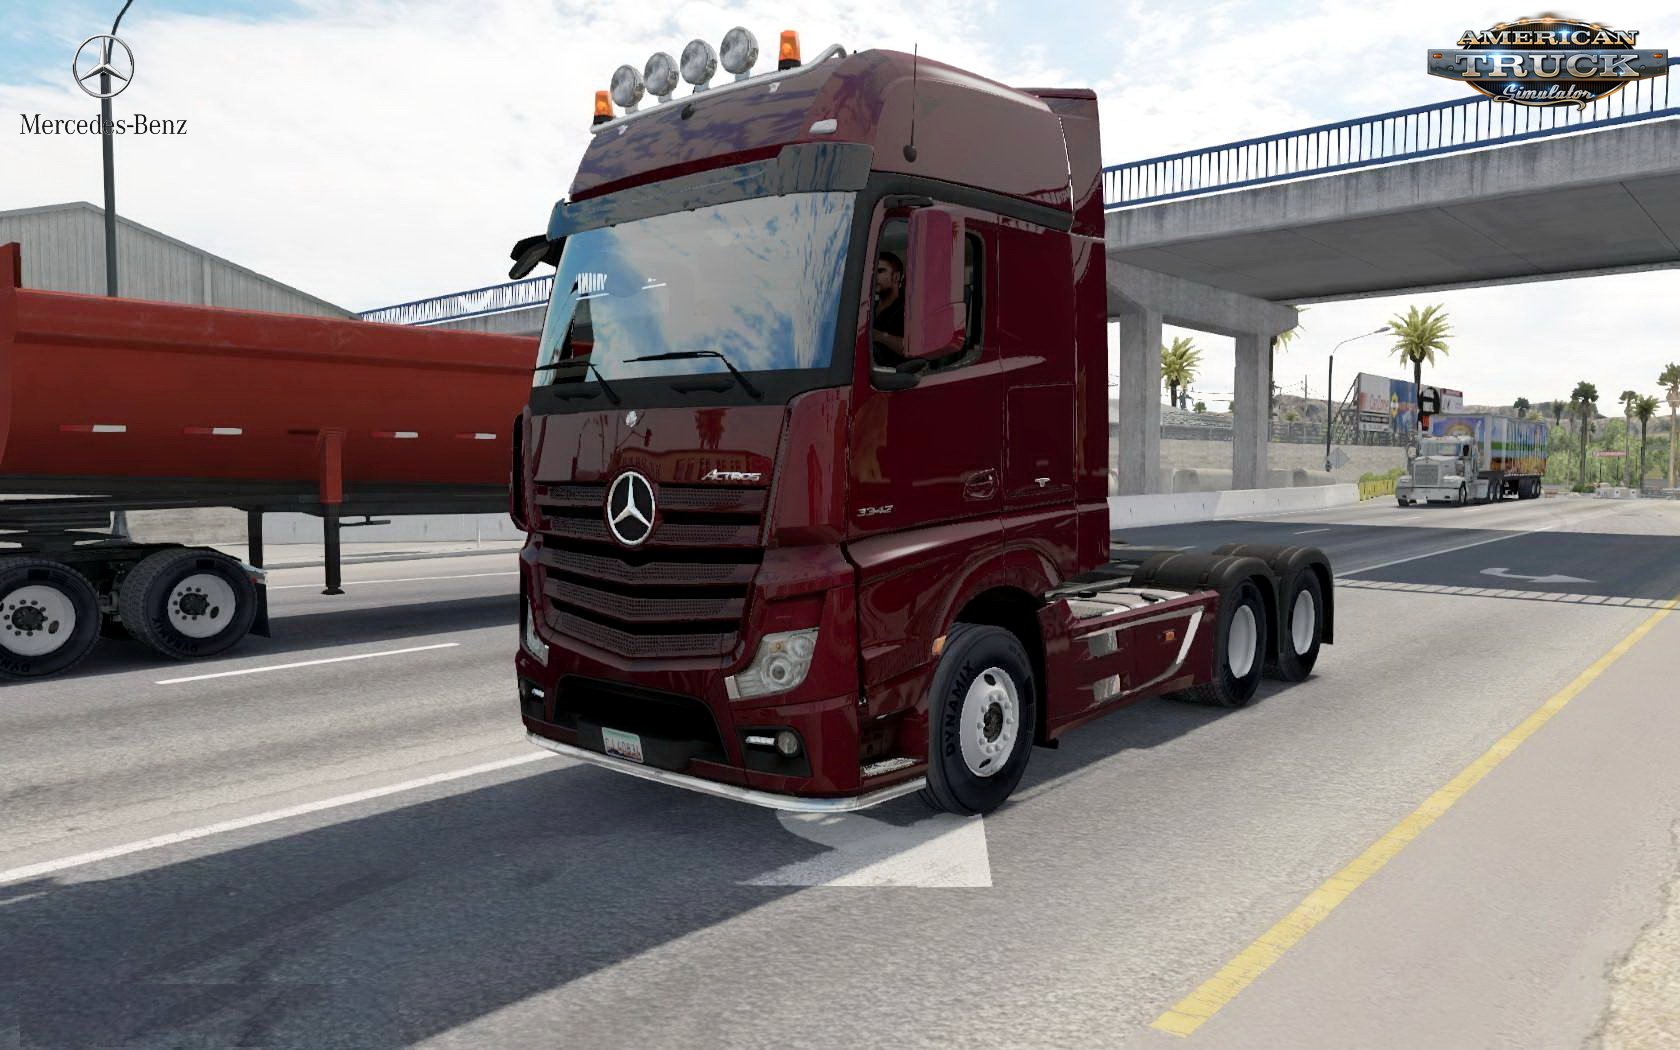 Mercedes Trucks Megapack v1.0 (1.34.x) for ATS